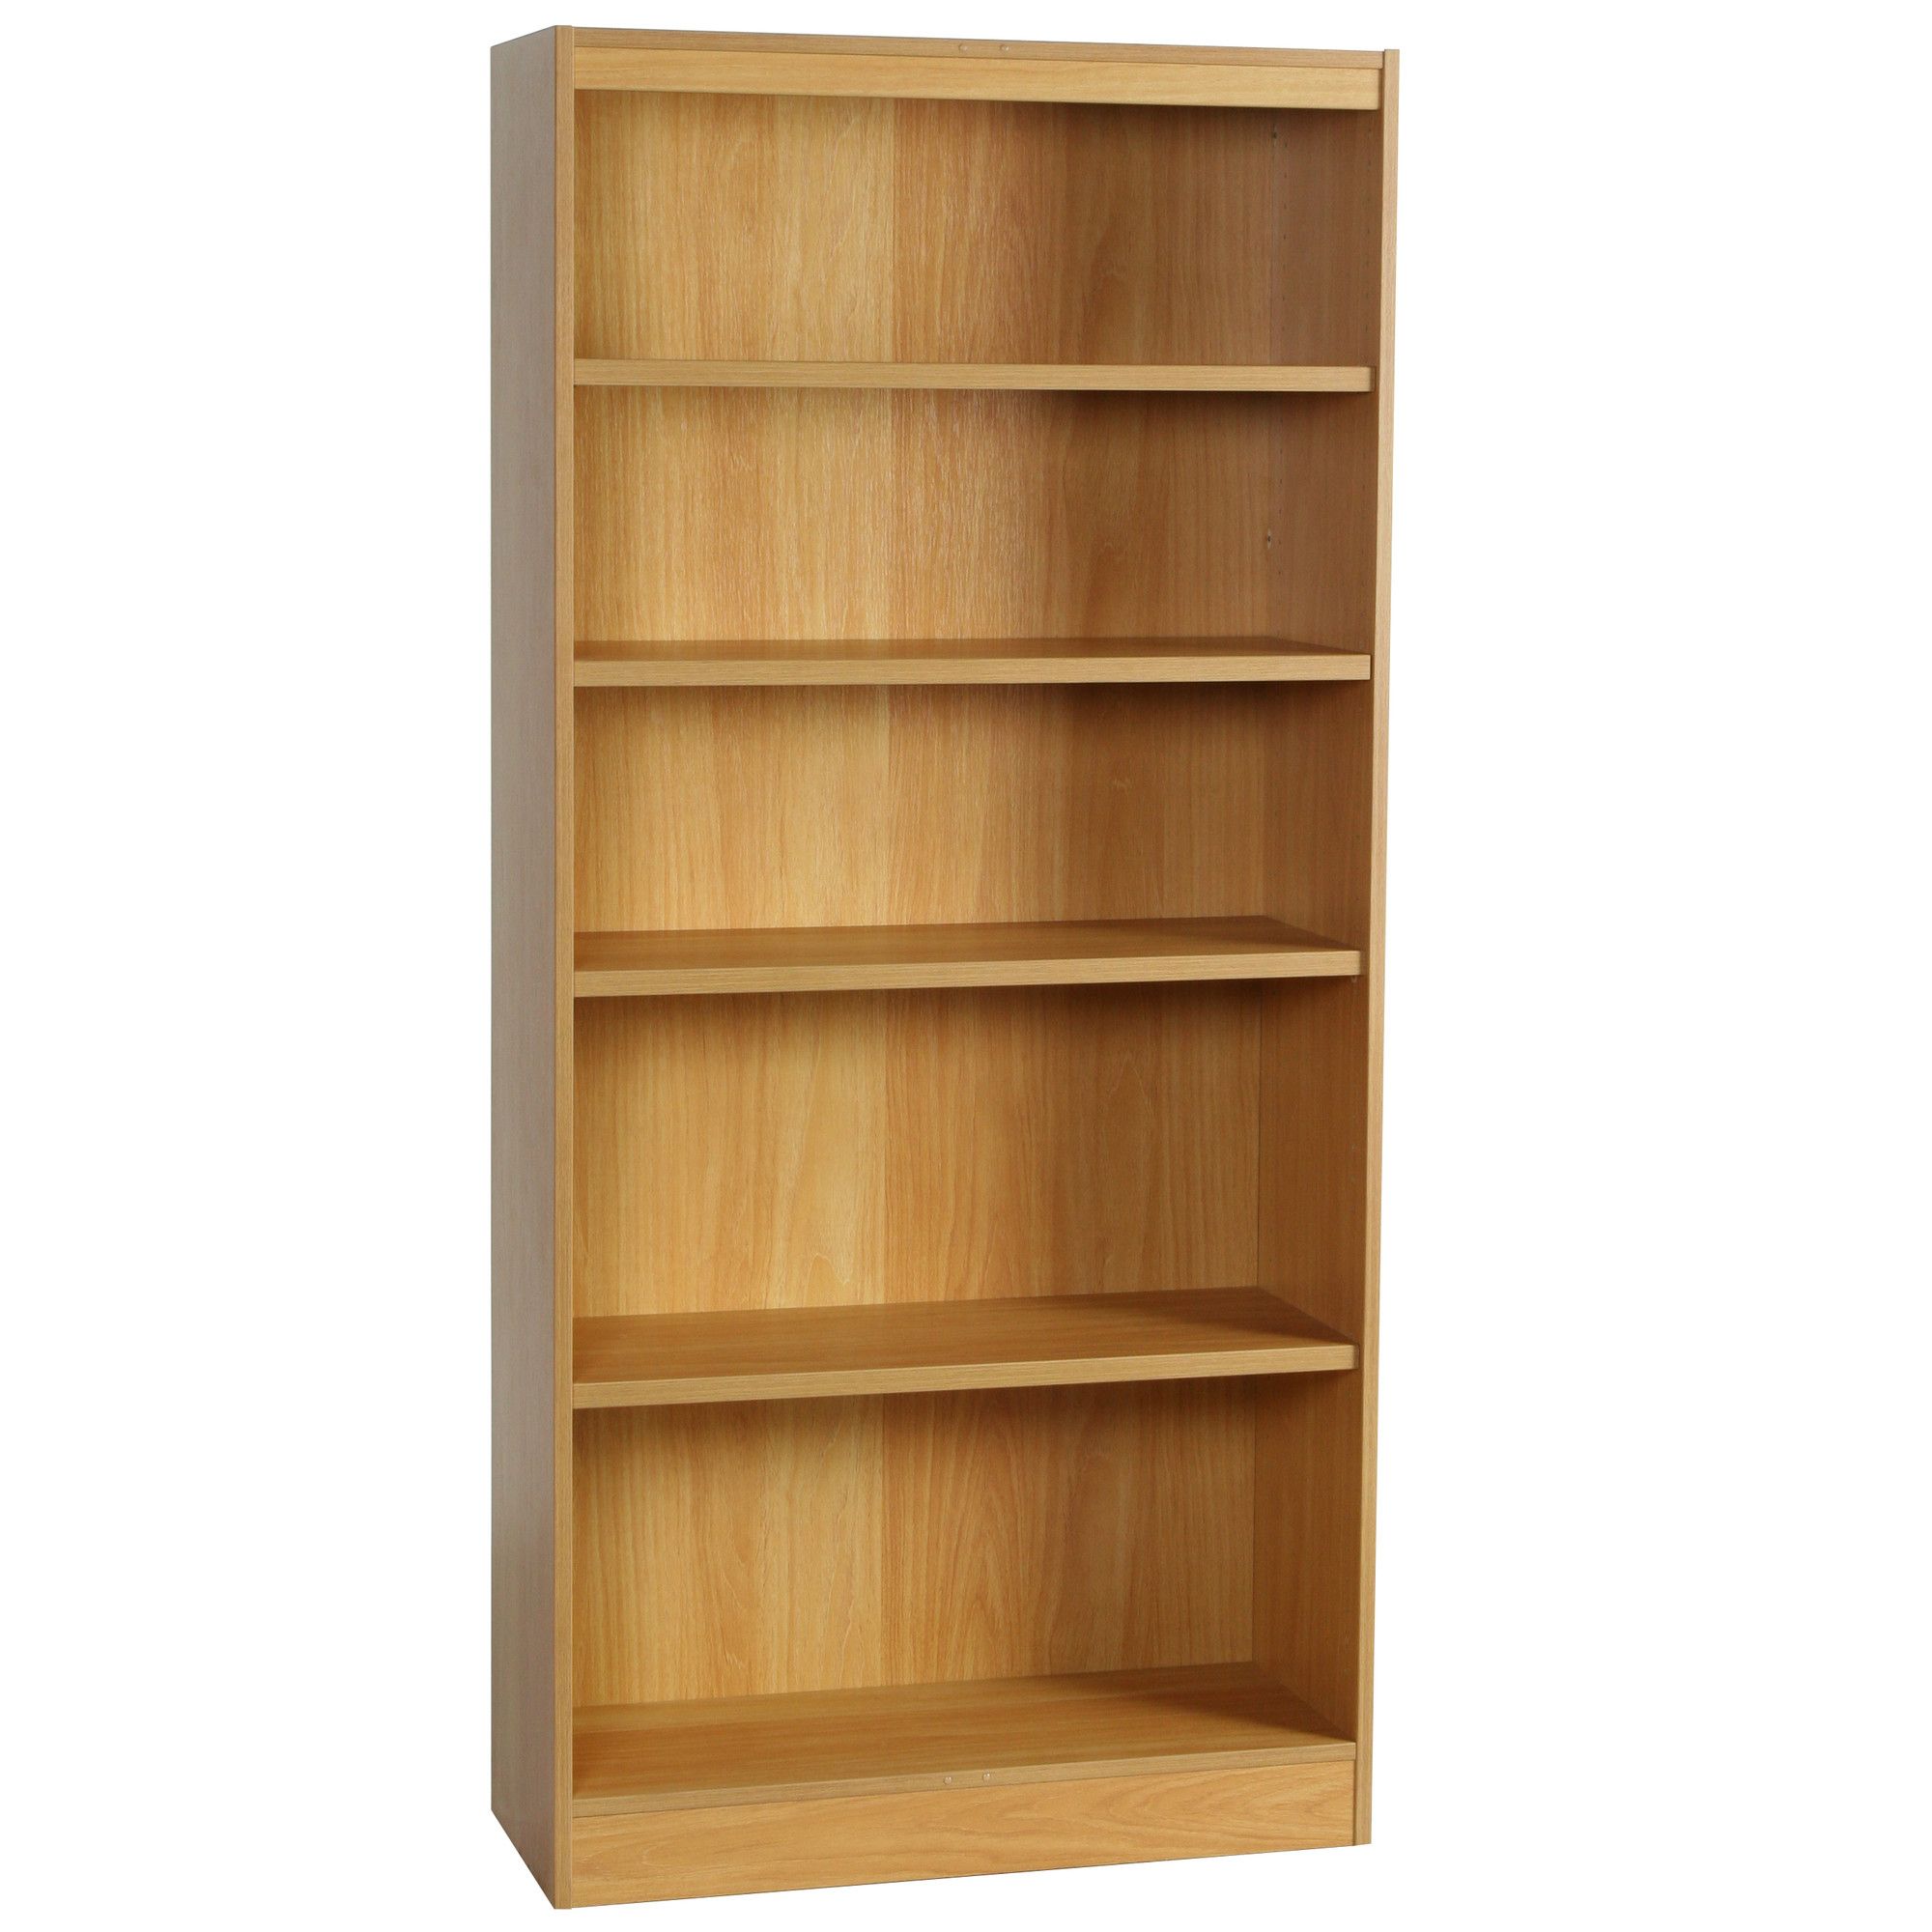 Enduro Five Shelf Tall Narrow Bookcase - English Oak at Tesco Direct